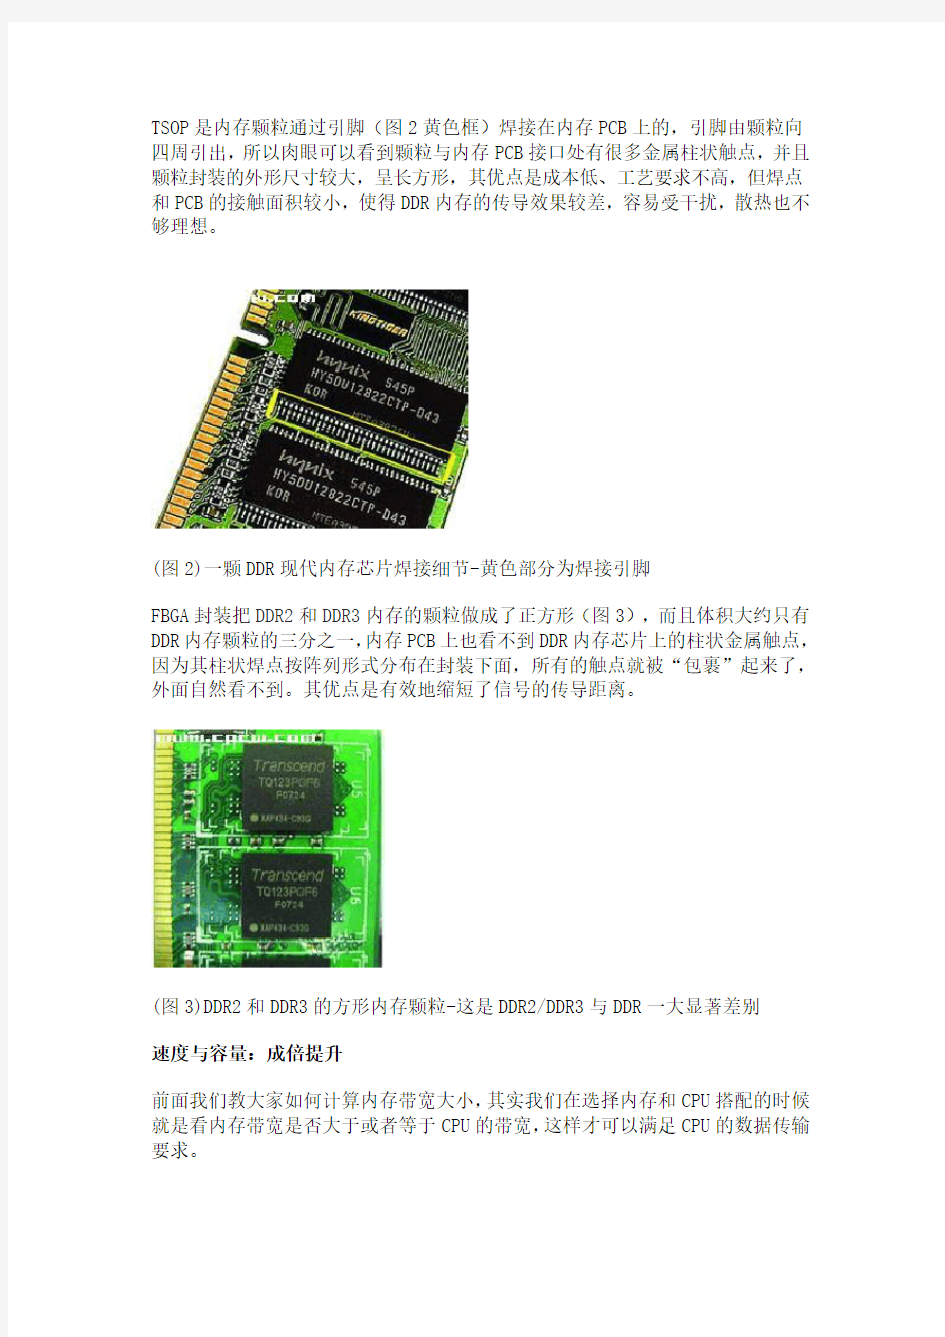 带图对比详解DDR3,DDR2,DDR内存条的区别